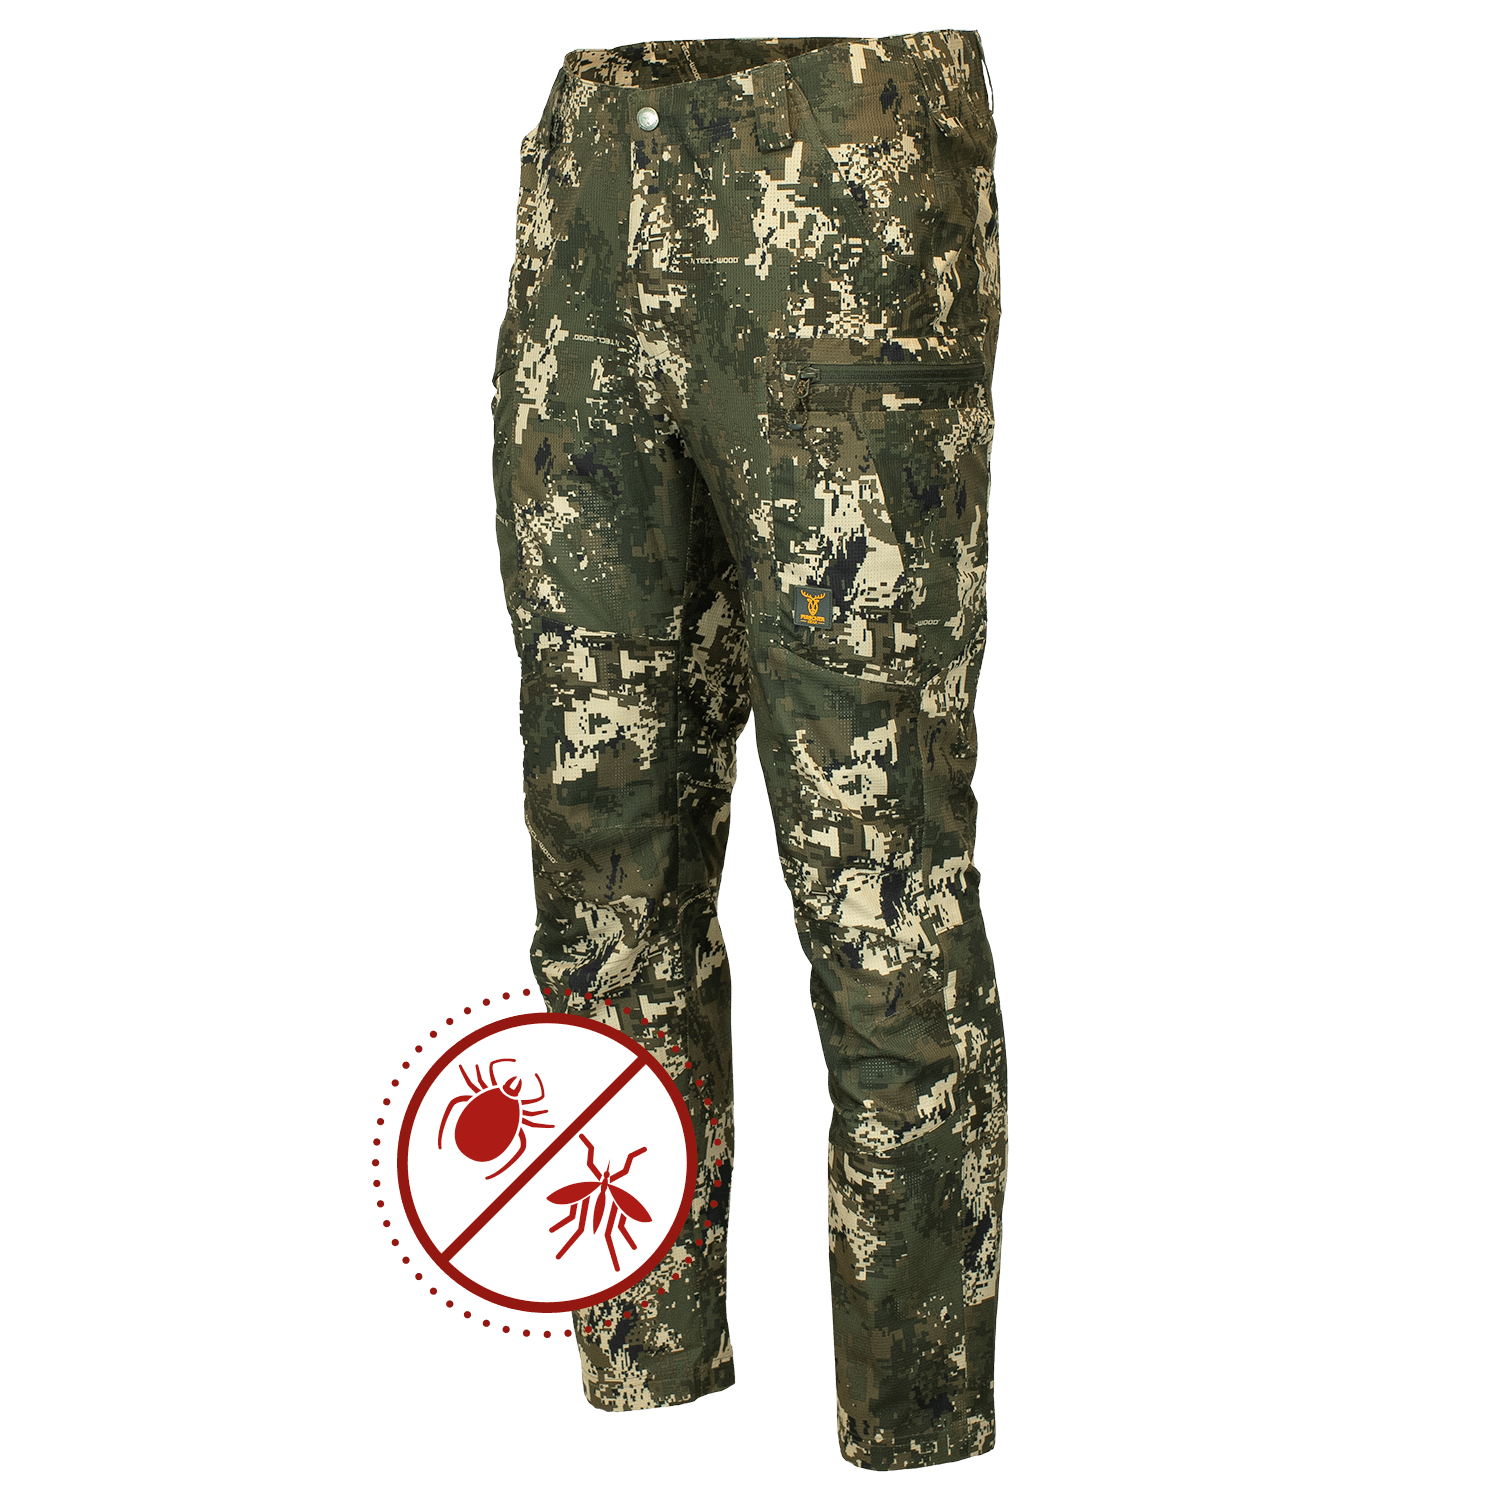 Pirscher Gear Ultralight Tanatex Pants (Optimax) - Camouflage Clothing